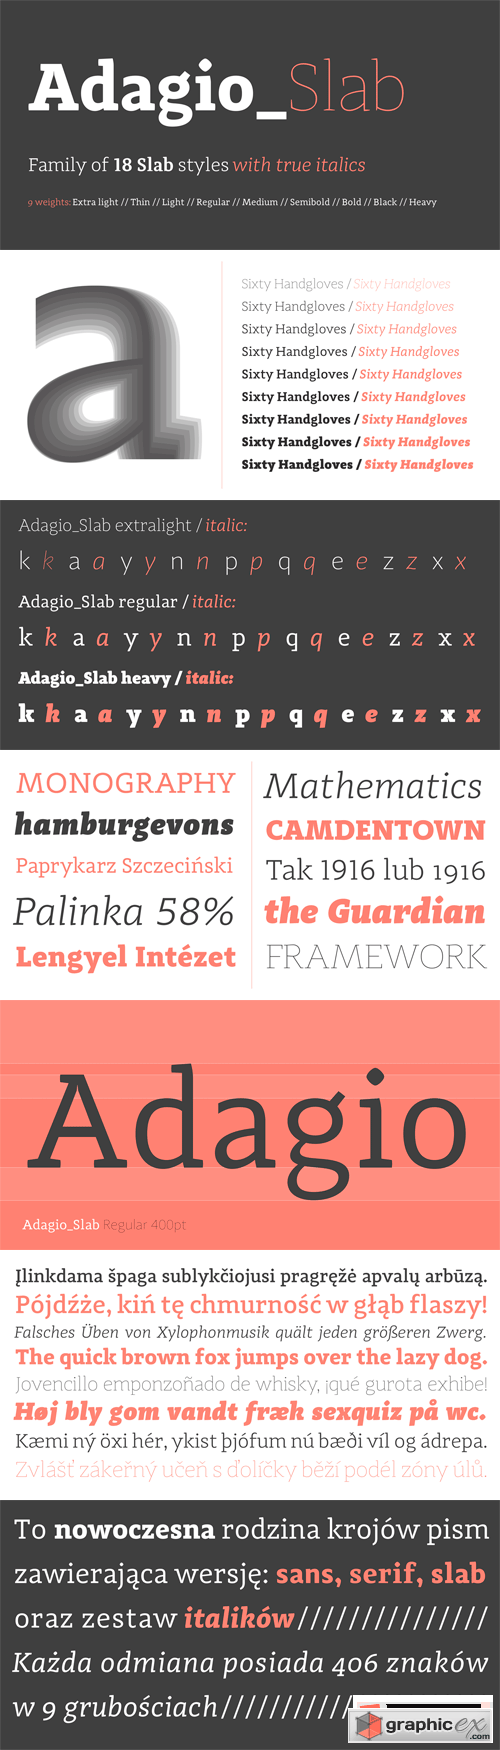 Adagio Slab Font Family - 18 Fonts for $270